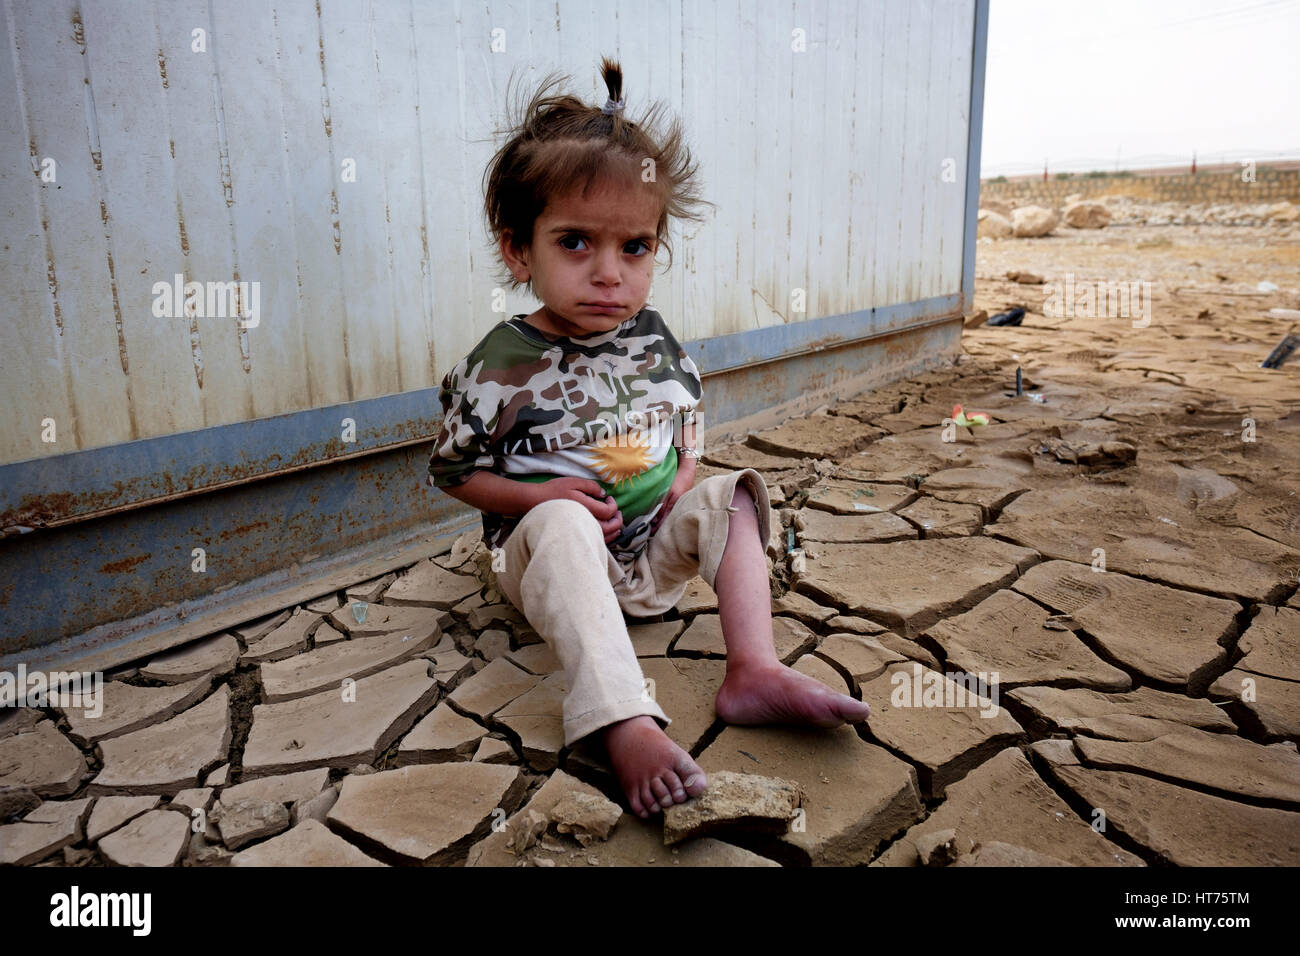 Refugees at refugee camp in norther iraq Kurdish region Stock Photo